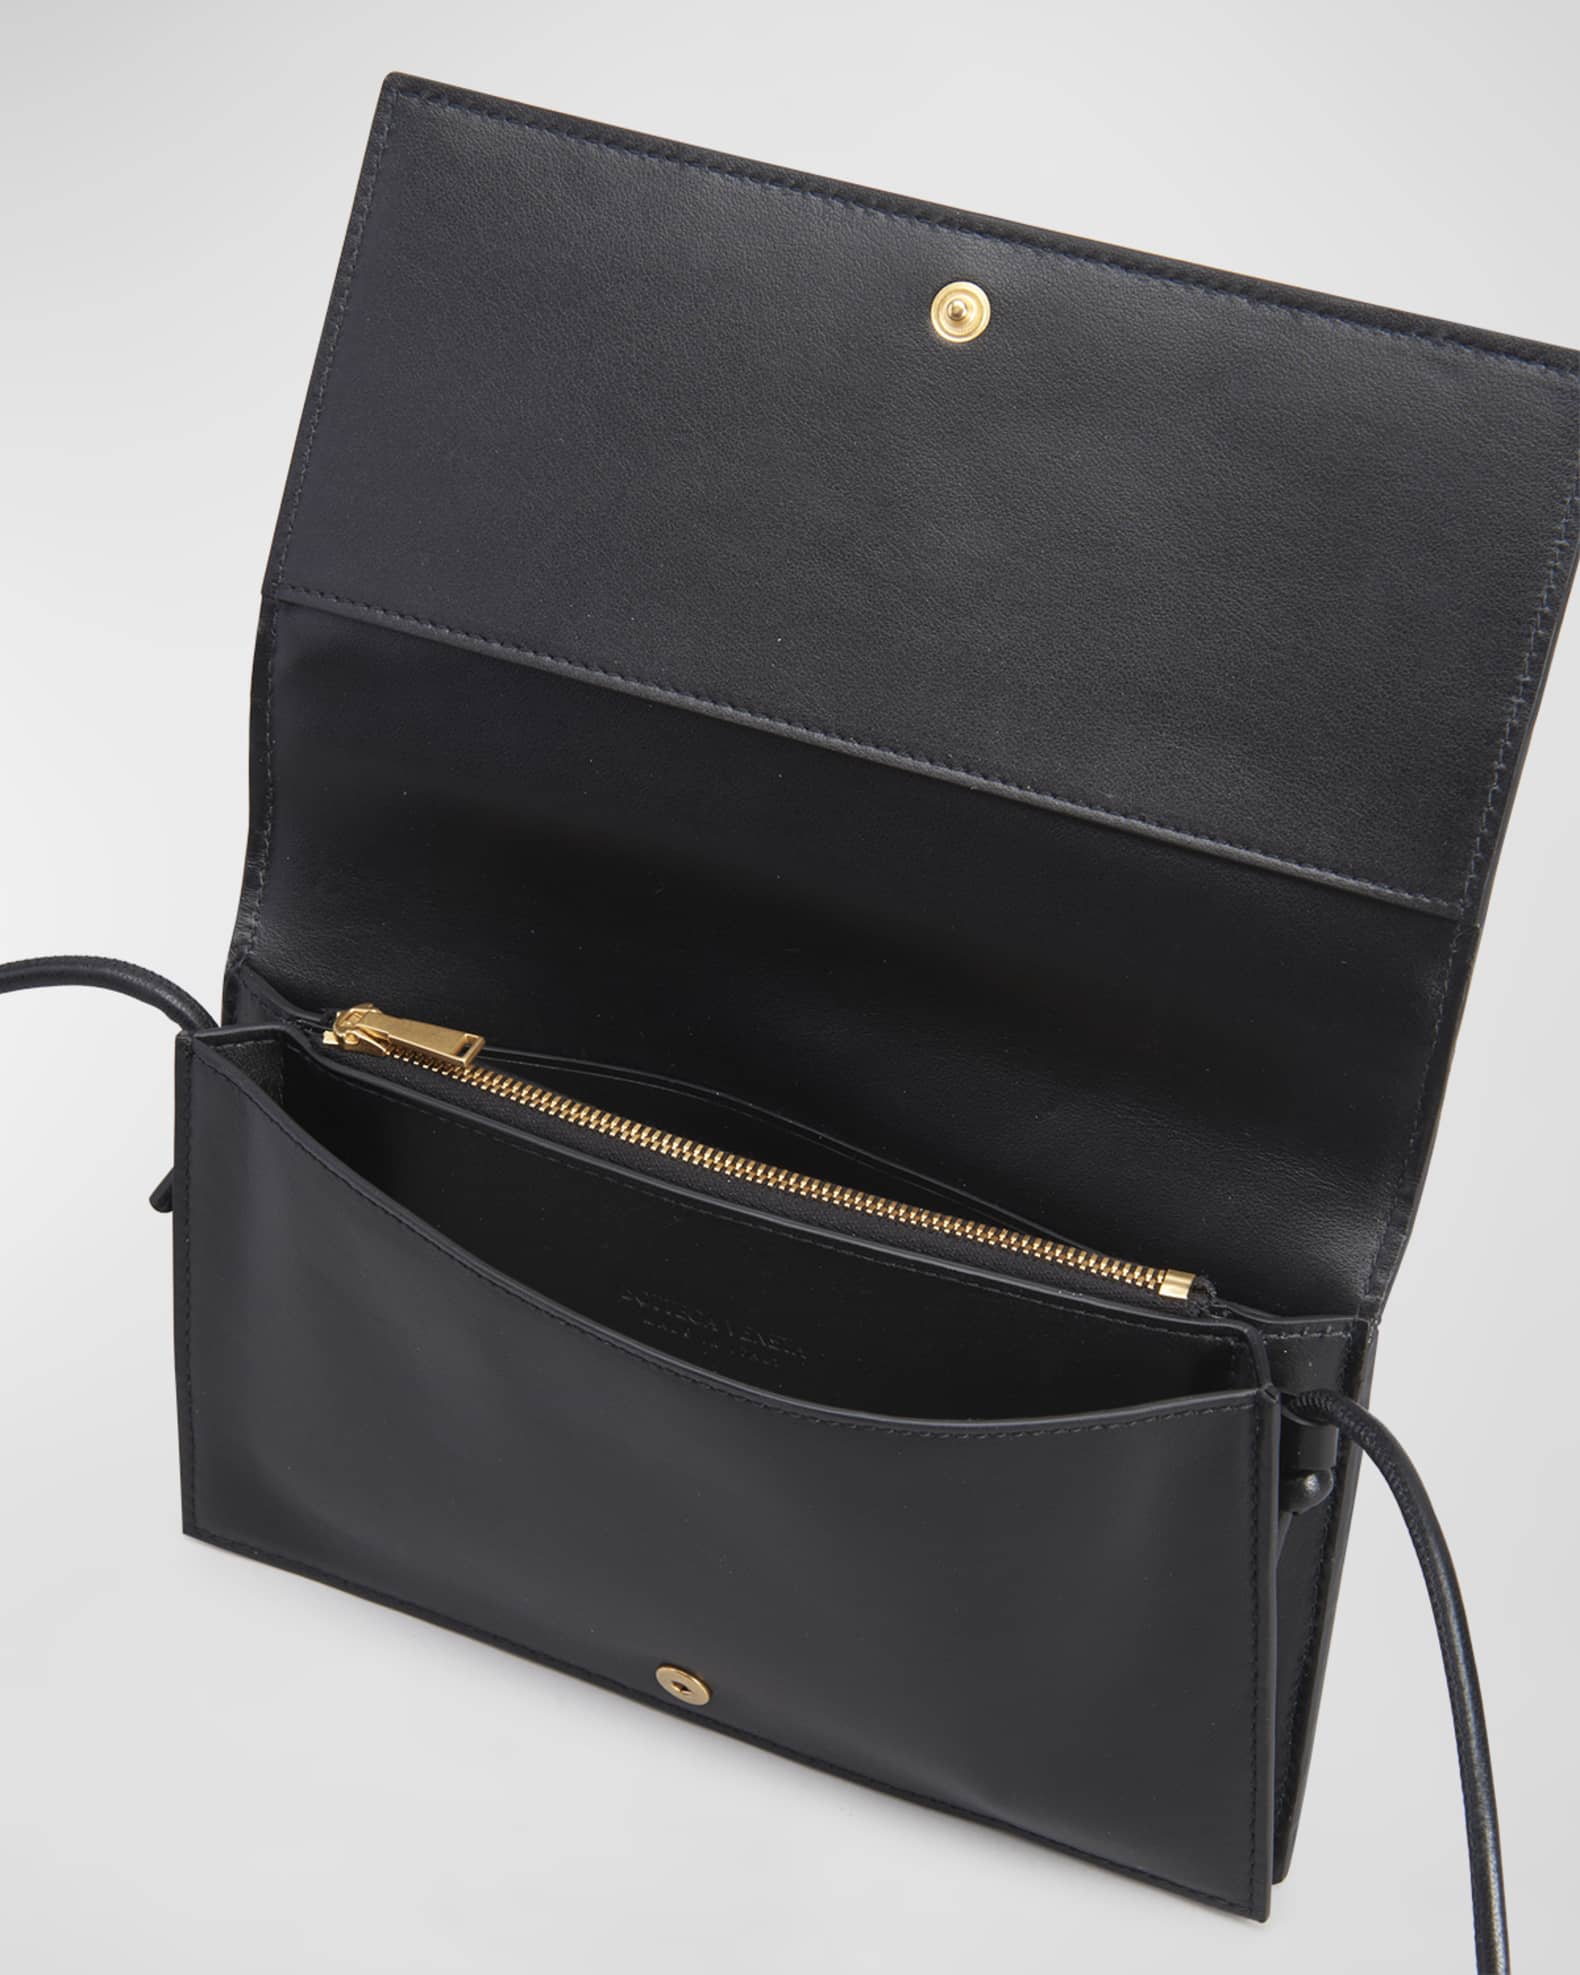 Neiman Marcus Intrecciato Weave Leather Wallet - Black Wallets